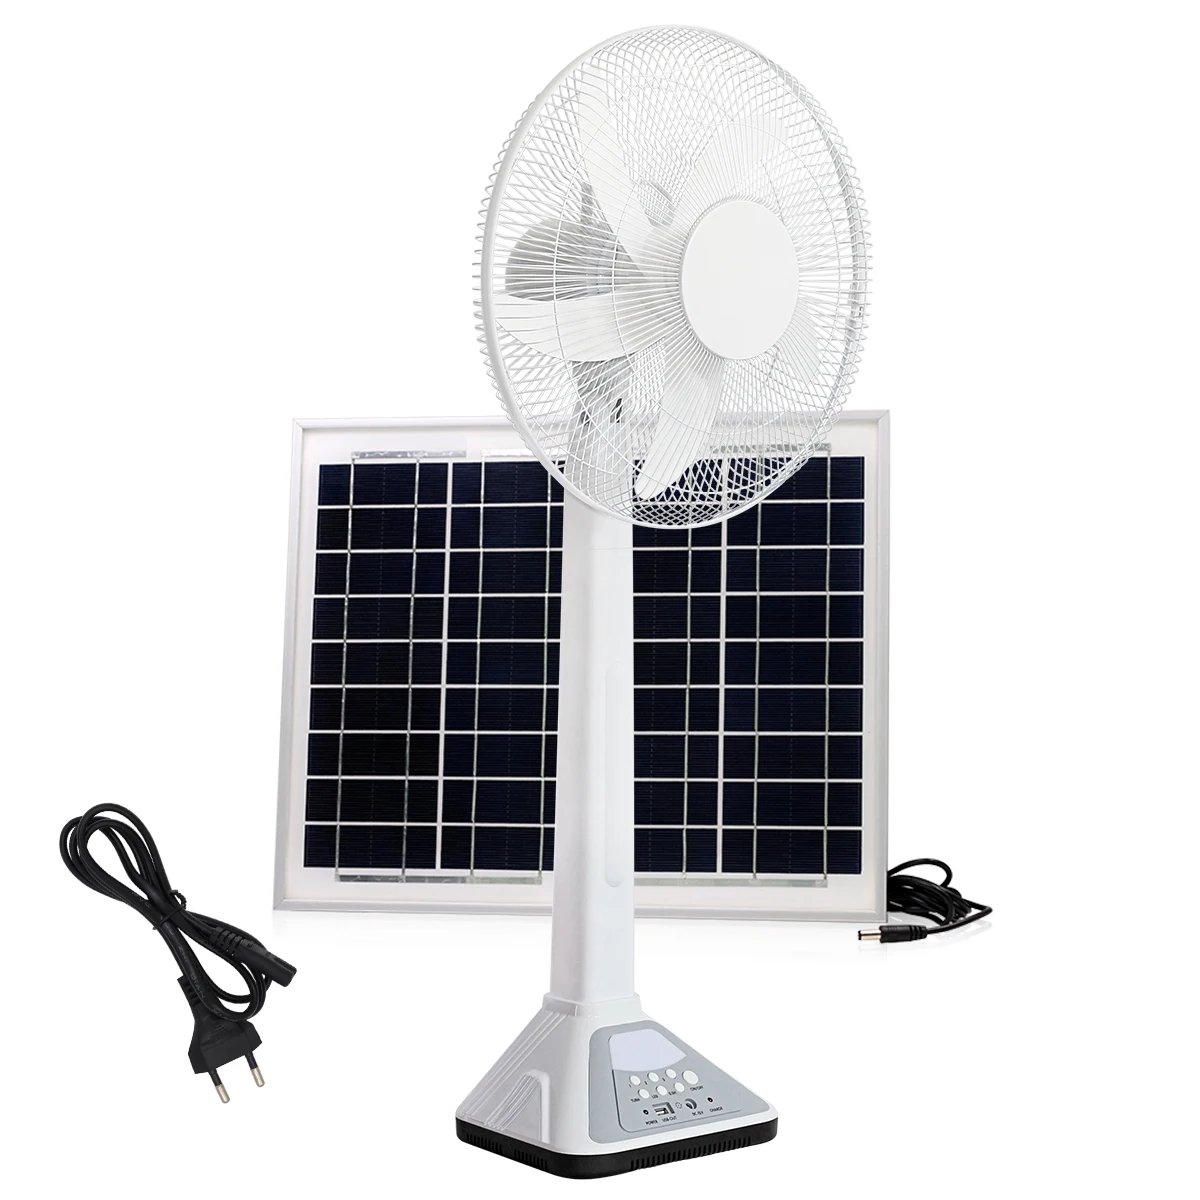 Sun power 16 Inch Energy Saving 40W Black up fan for  Home Camping Plastic Solar Fan (62407944081)